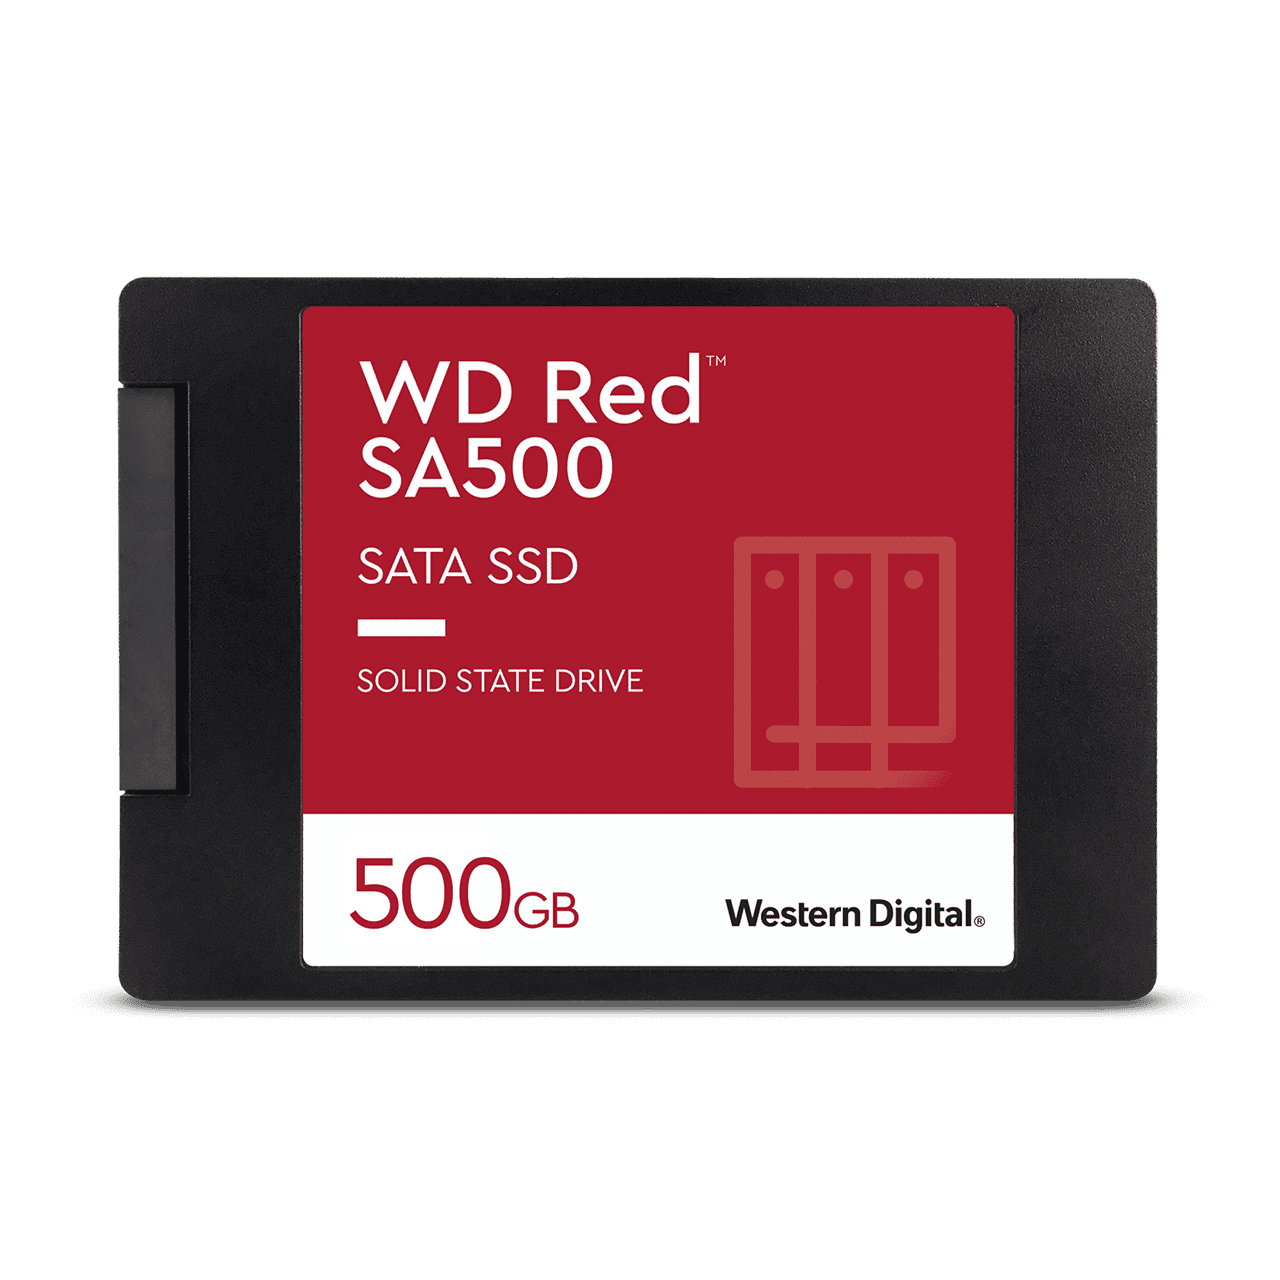 wd-red-sata-ssd-500gb.png.thumb.1280.1280